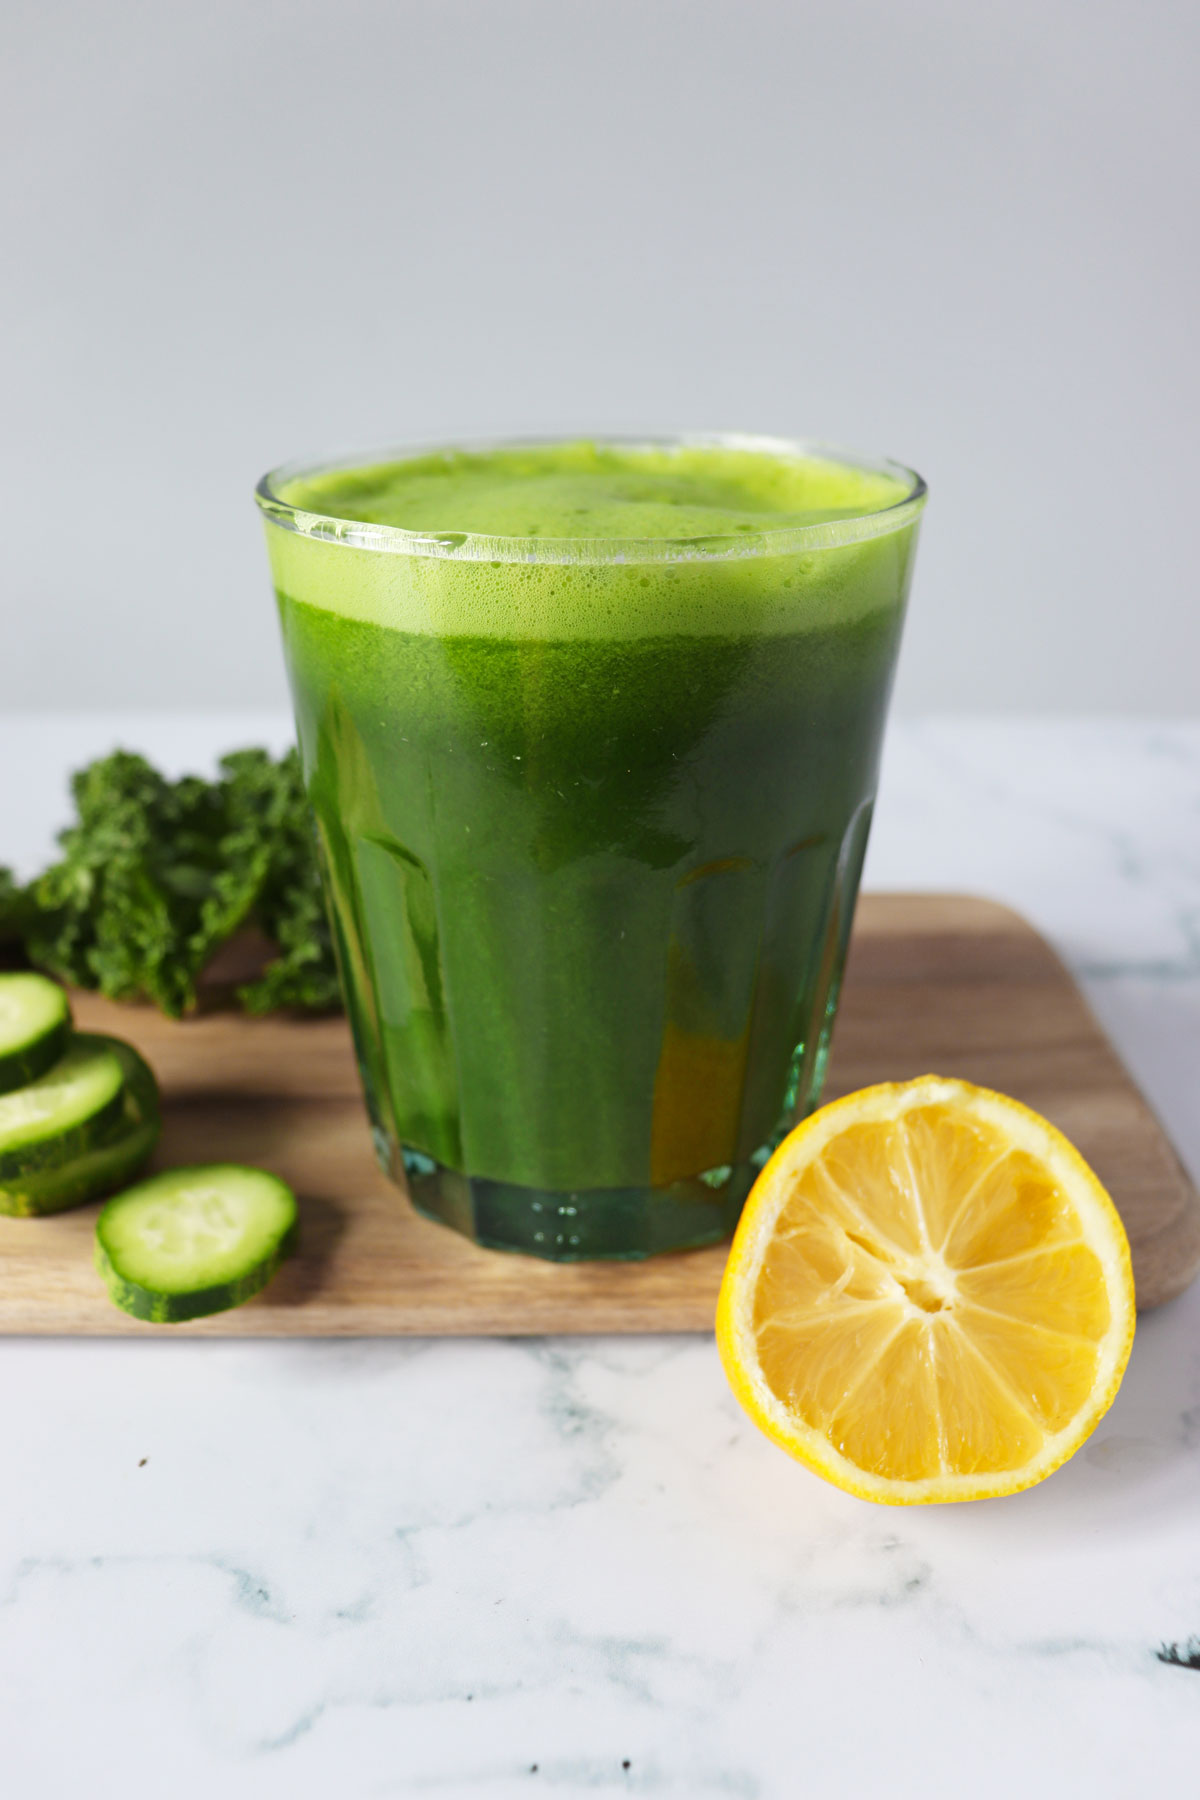 celery and kale juice benefits